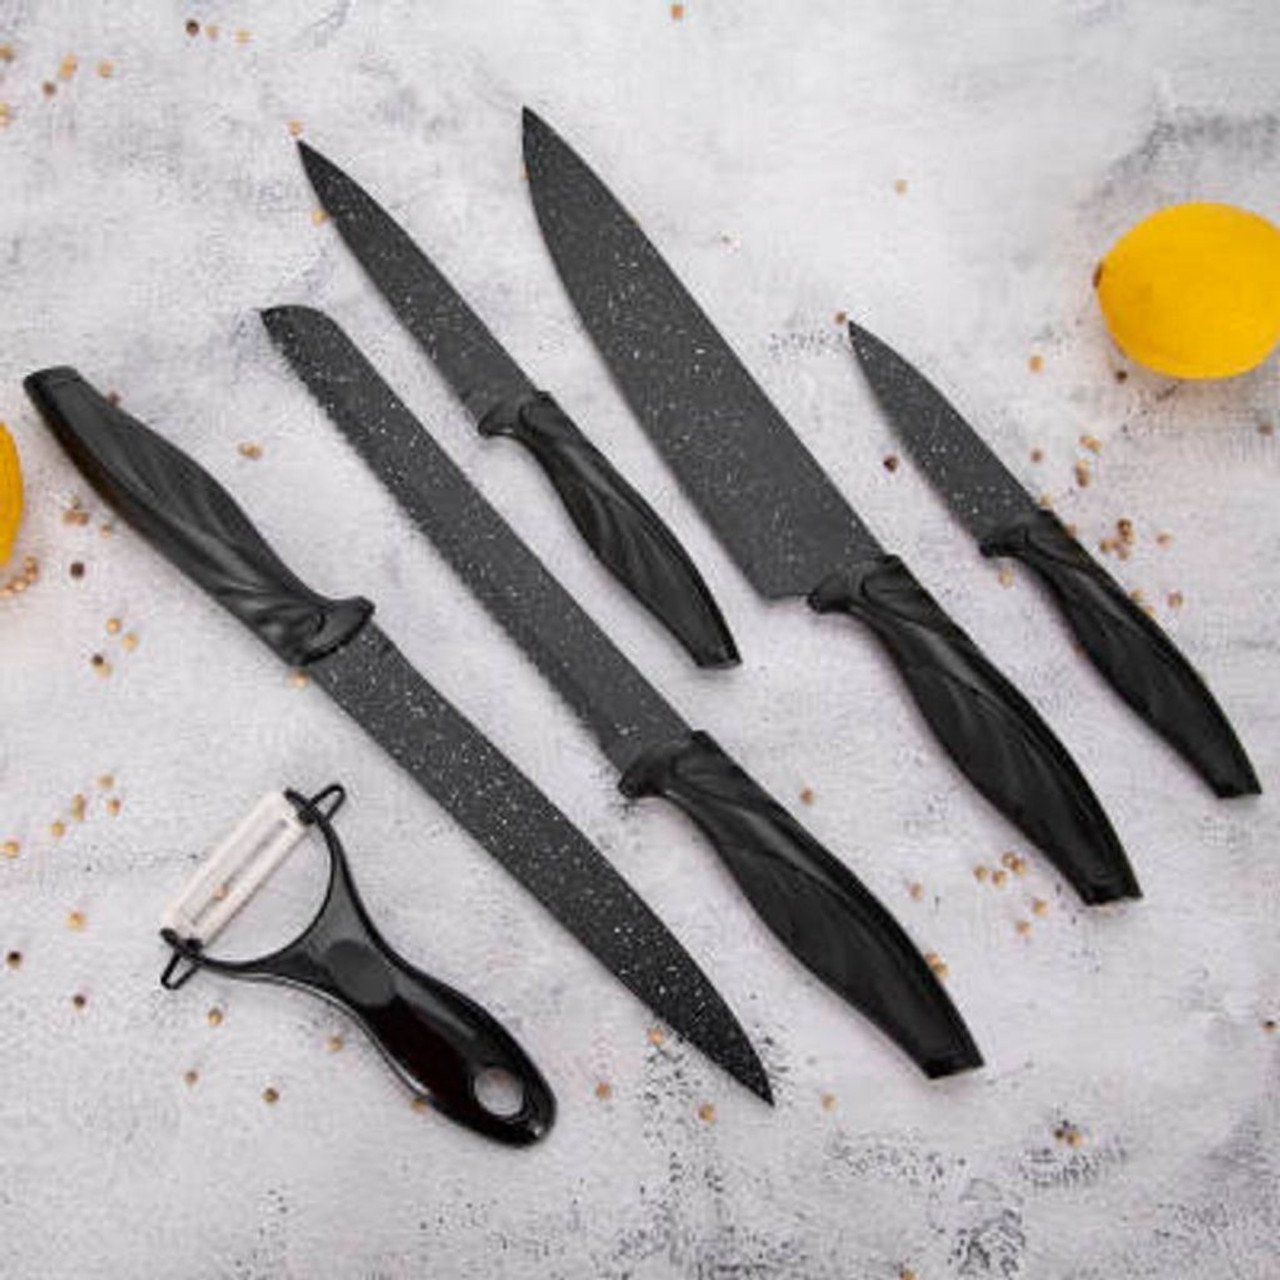 Nuvita™ 6-Piece Kitchen Knife Set - Pick Your Plum